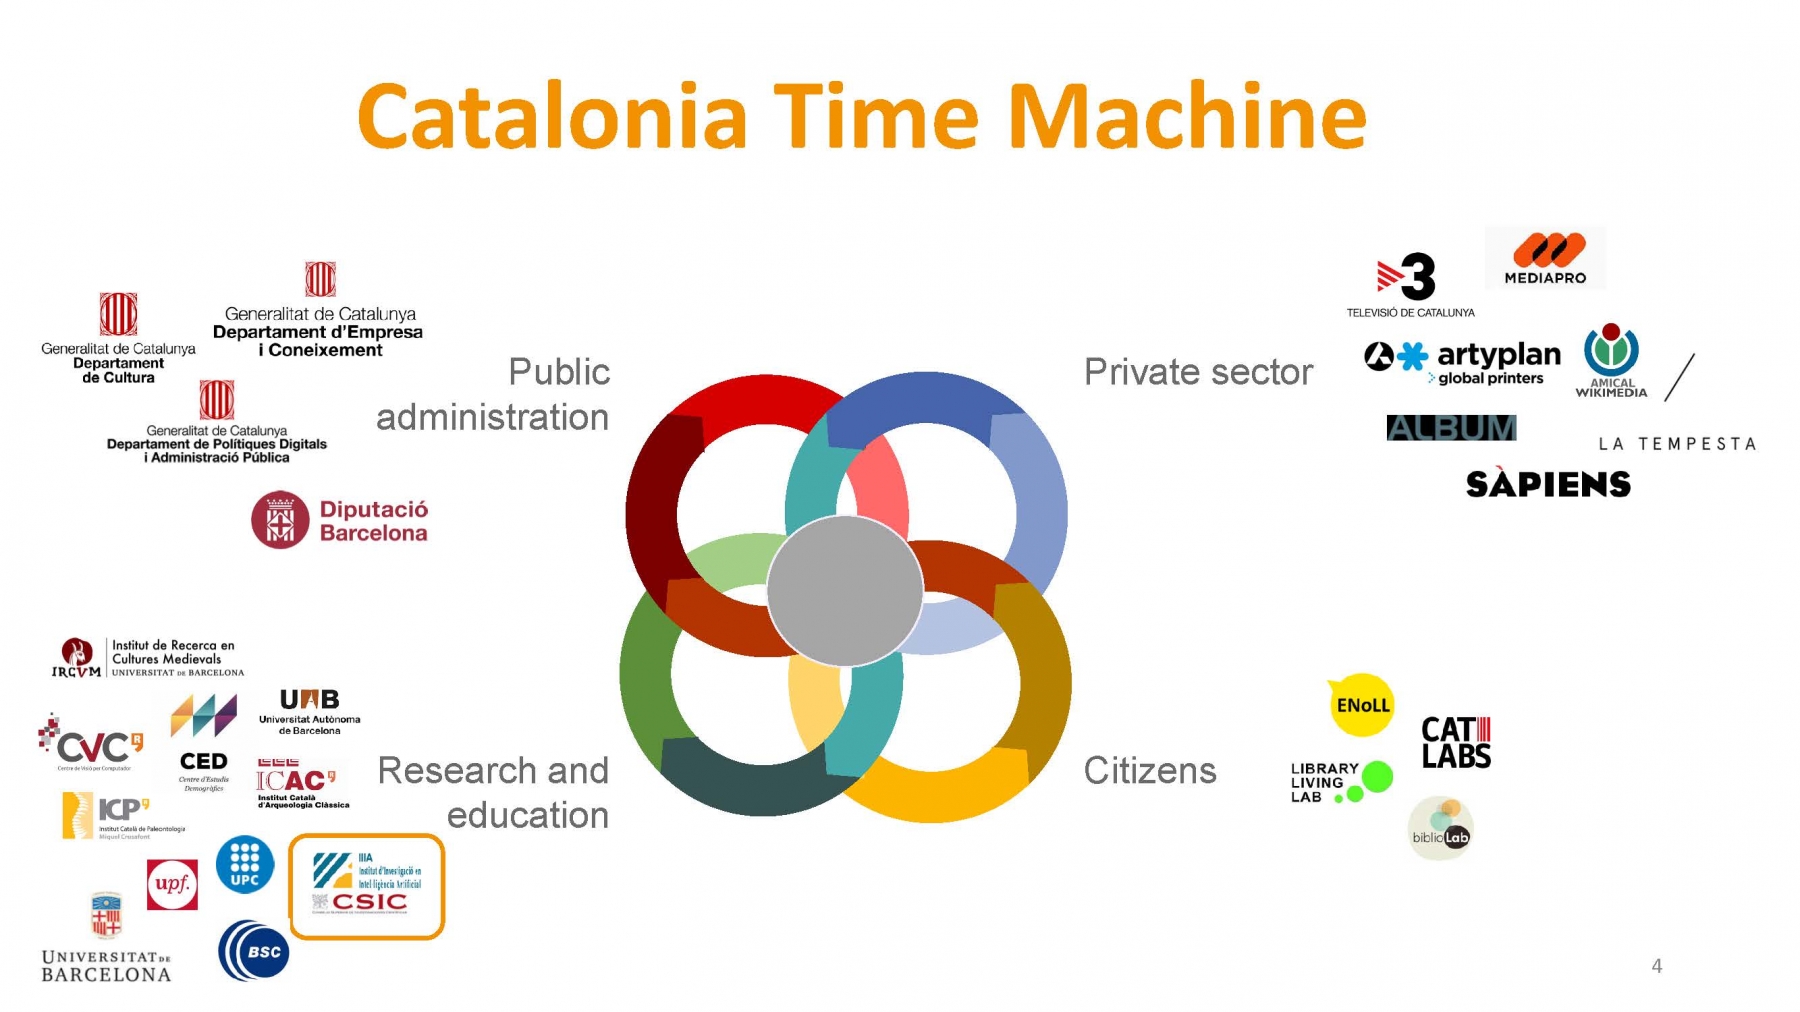 IIIA-CSIC & Catalonia Time Machine (pres. by Jordi Sabater-Mir)